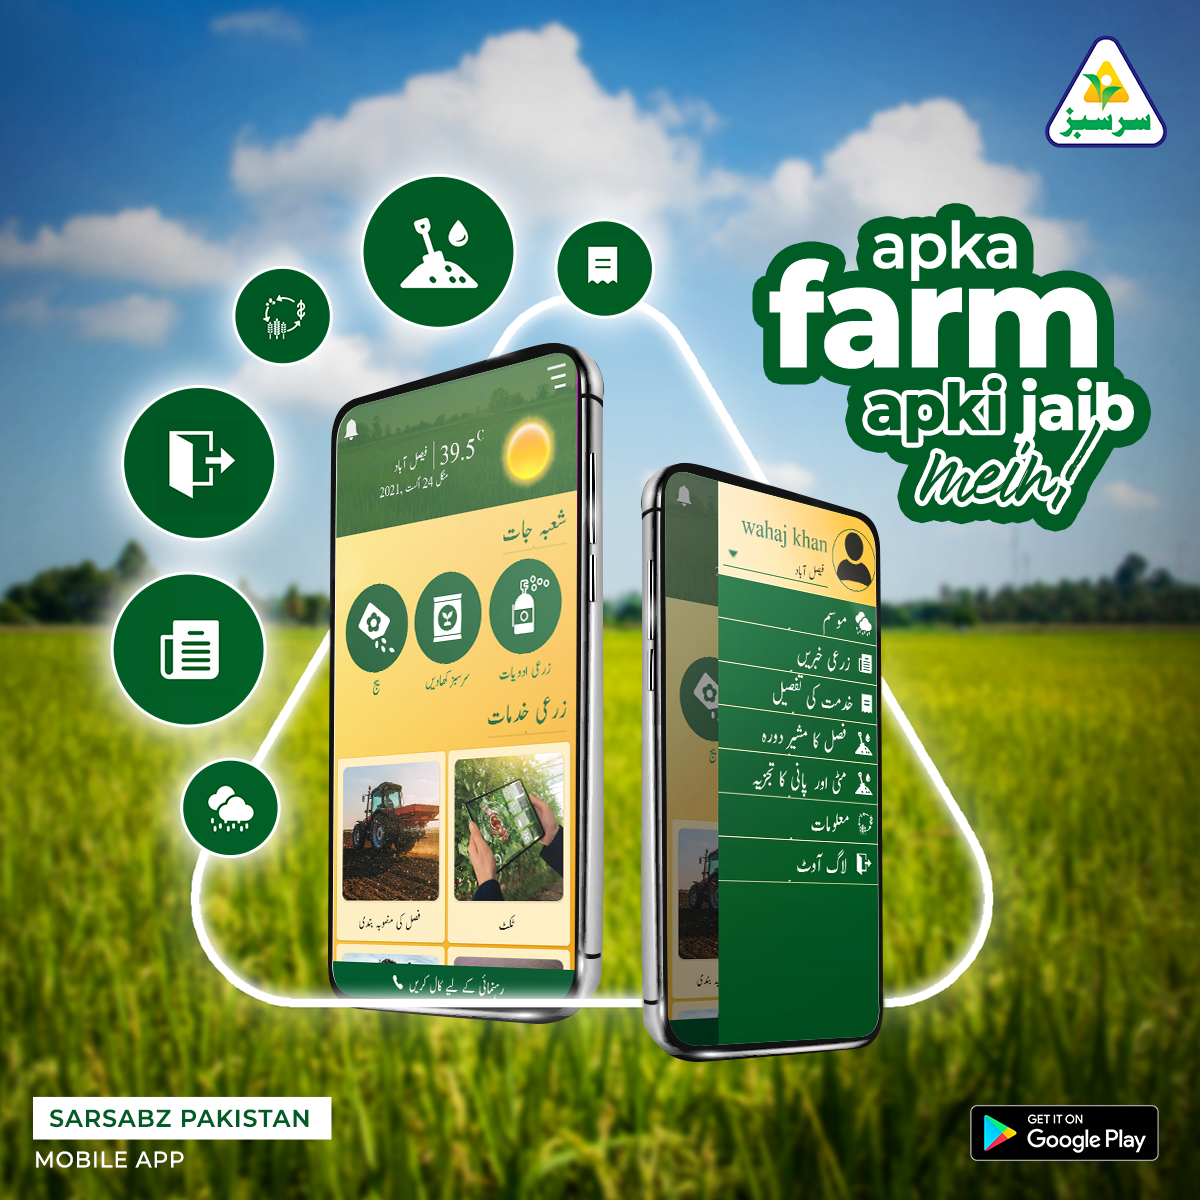 Sarsabz Pakistan Mobile App